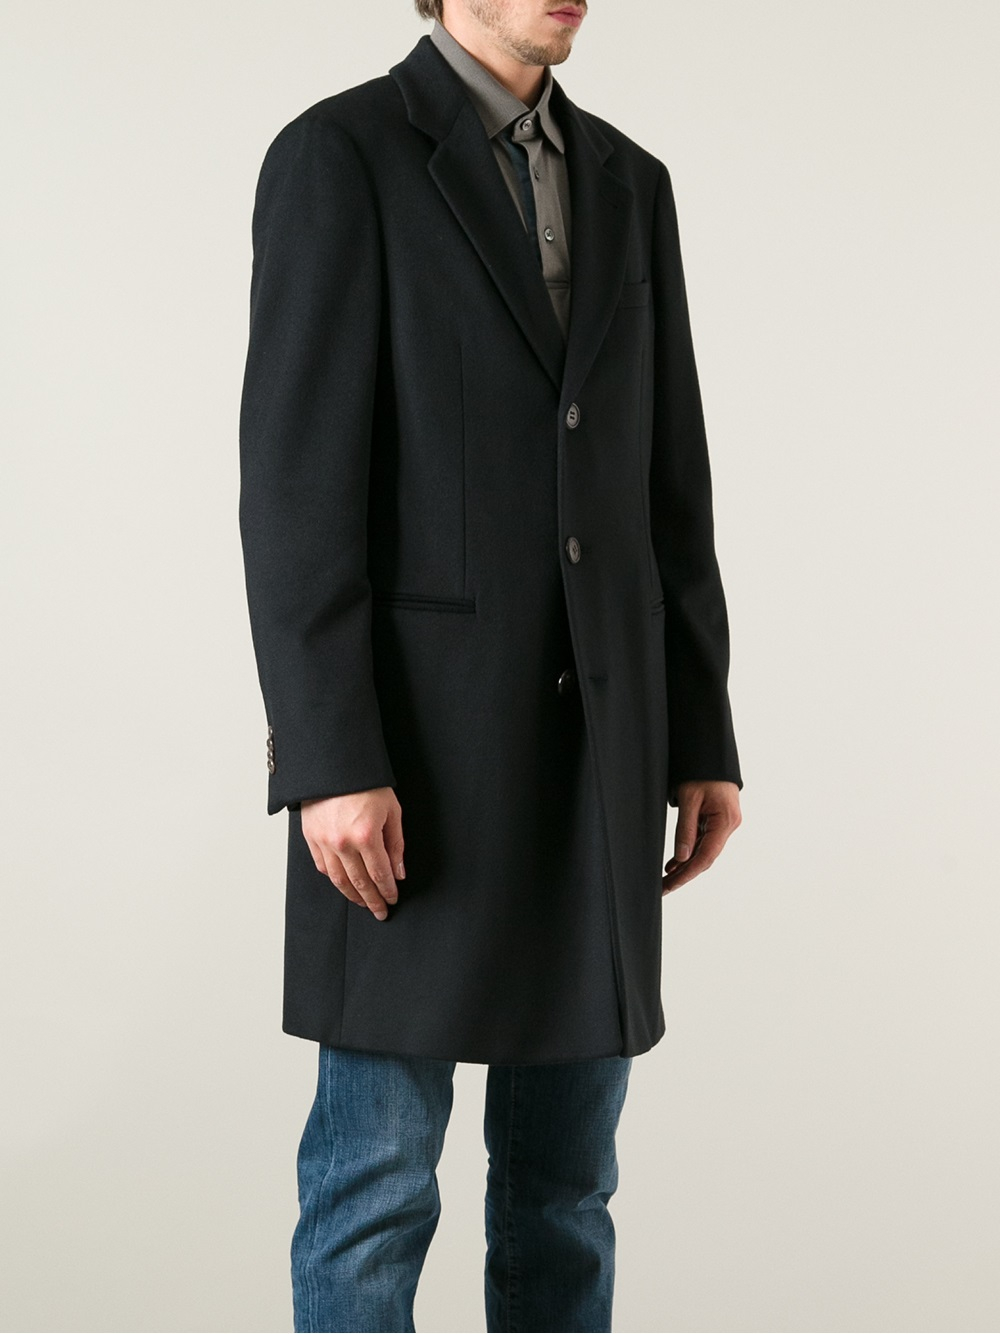 Giorgio Armani Dress Coat in Black for Men - Lyst